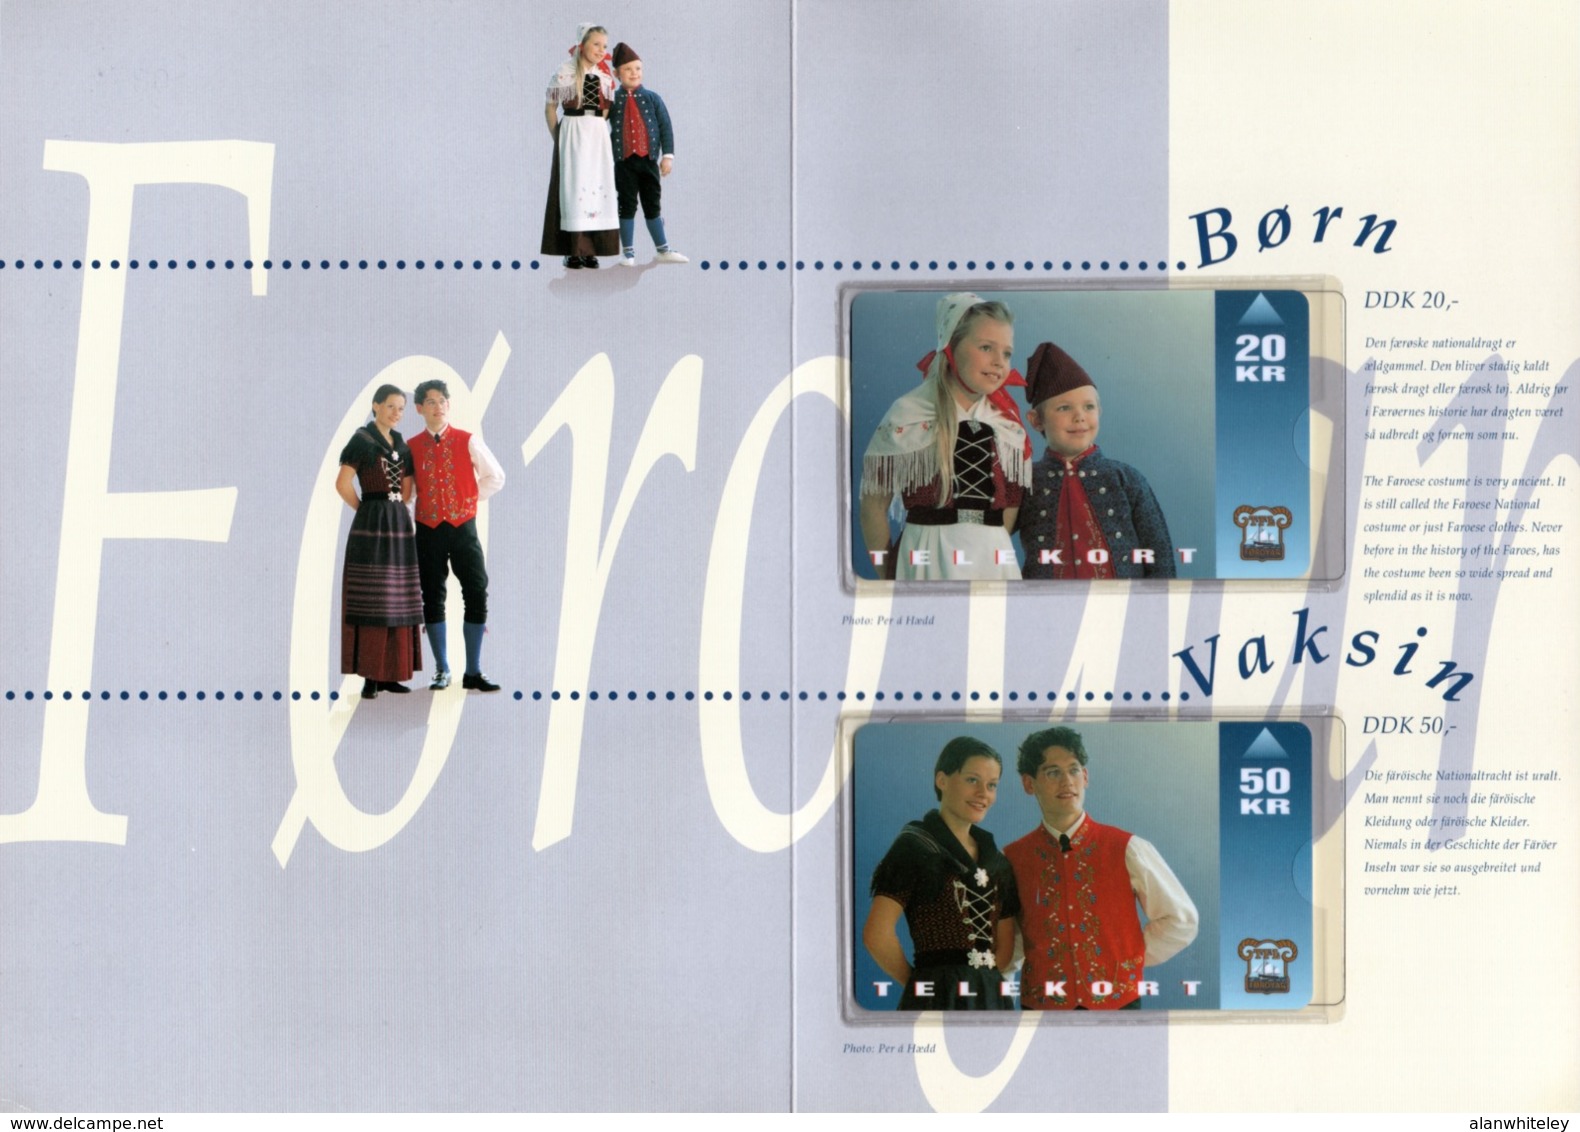 FAROES ISLANDS 1995 National Costume: Presentation Pack Containing 2 Phonecards MINT/UNUSED - Faroe Islands